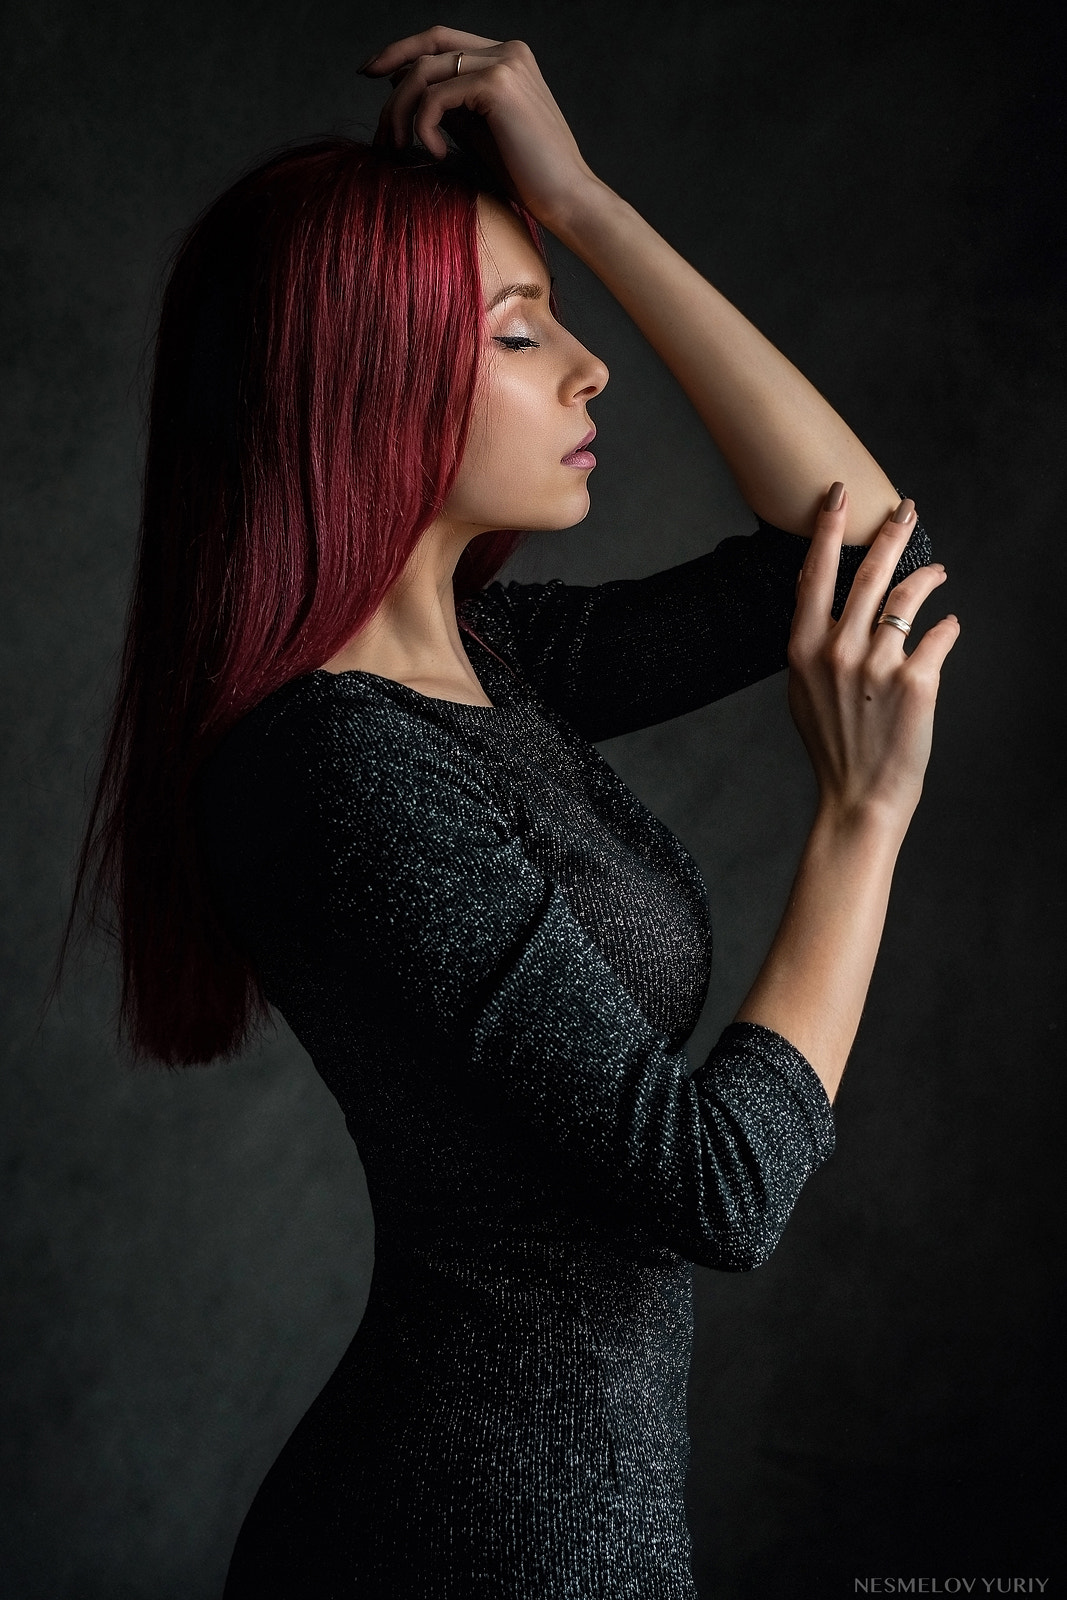 Yury Nesmelov Women Redhead Long Hair Straight Hair Closed Eyes Jewelry Rings Dress Profile Make Up  1067x1600